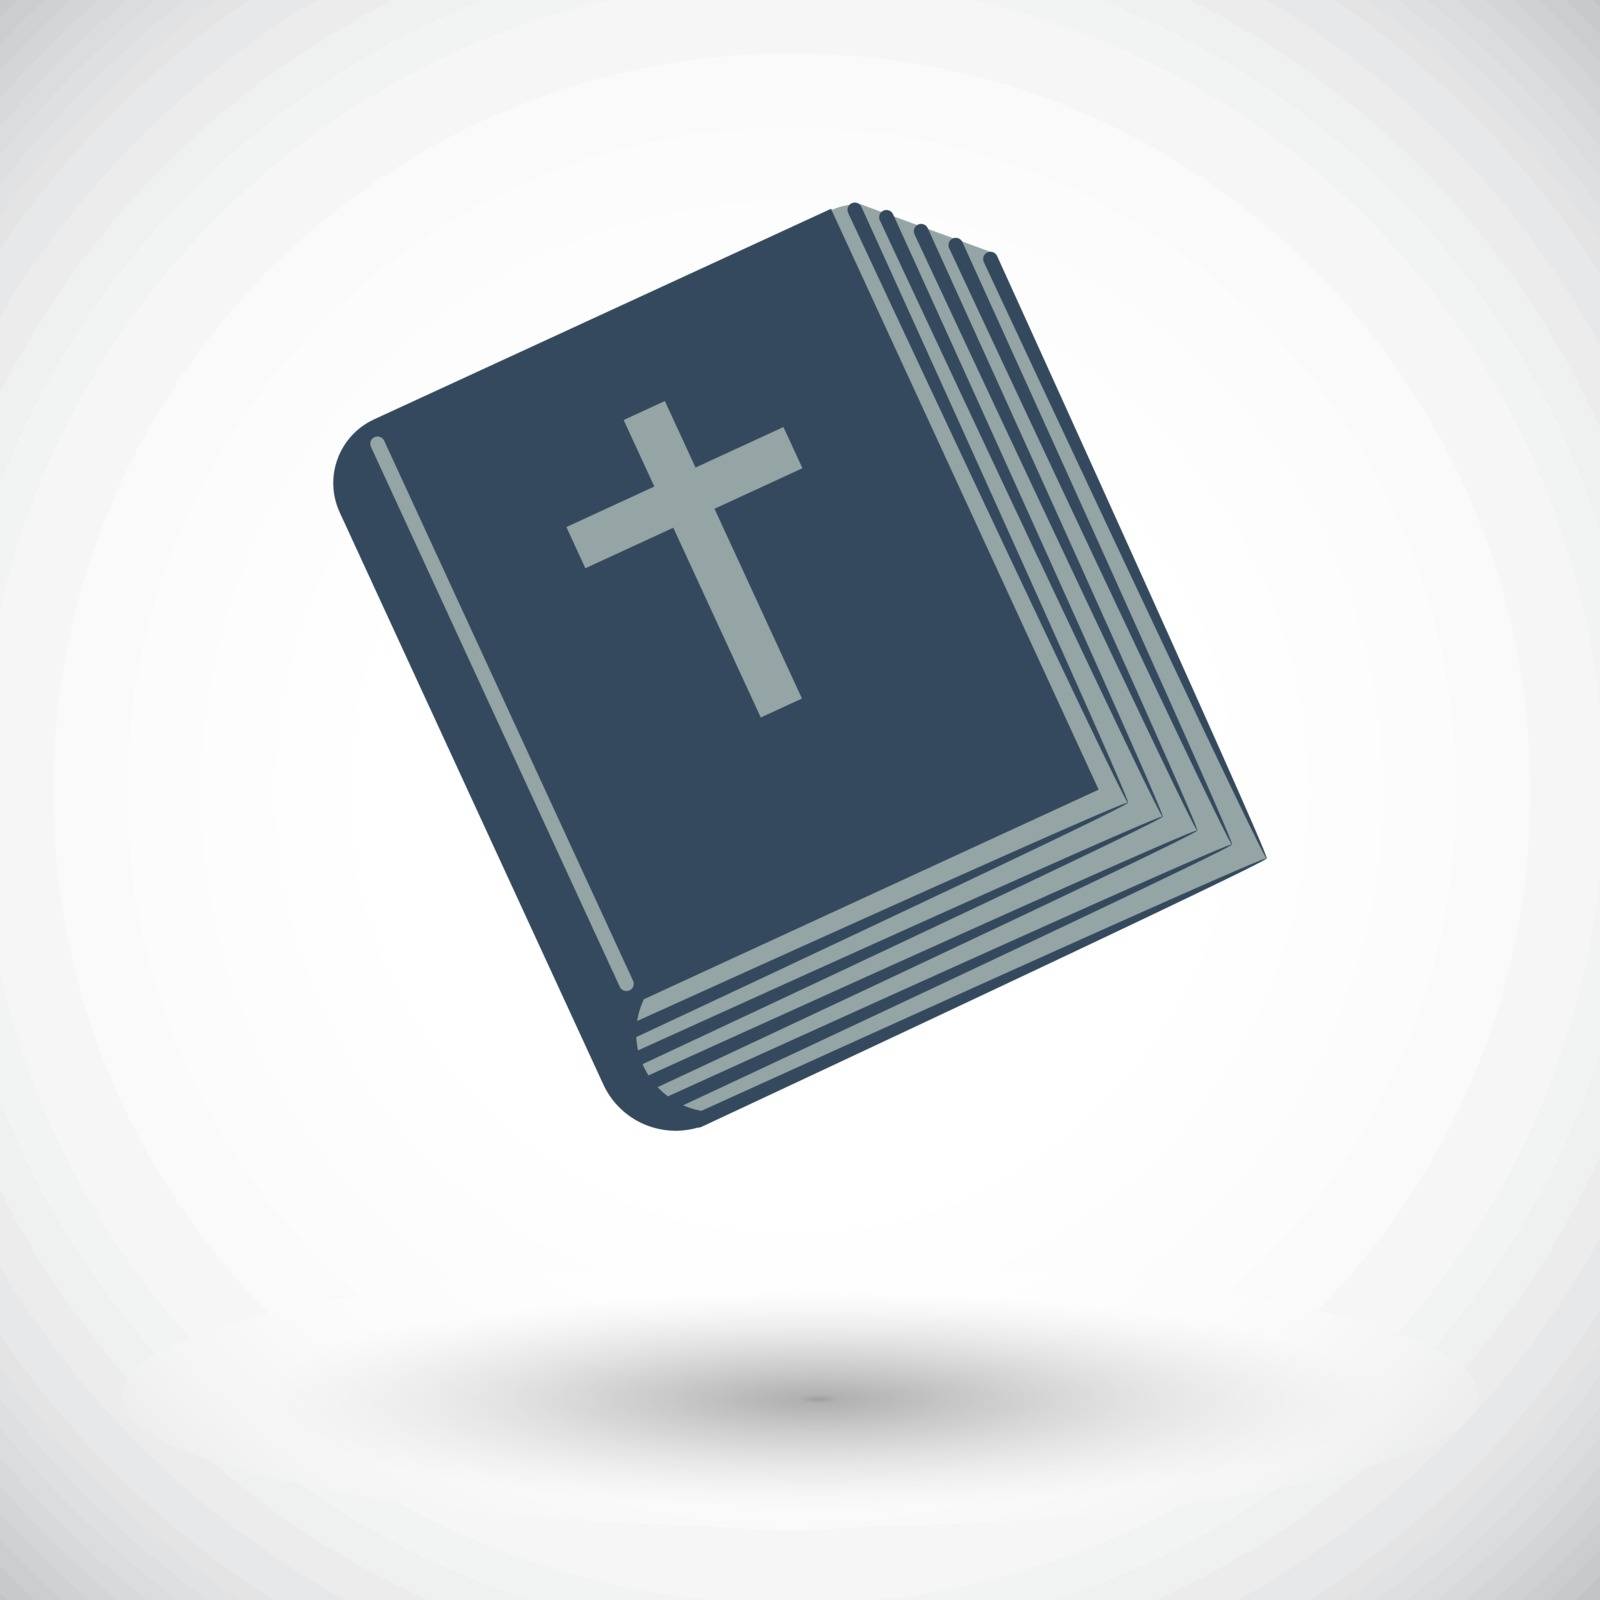 Bible. Single flat icon on white background. Vector illustration.